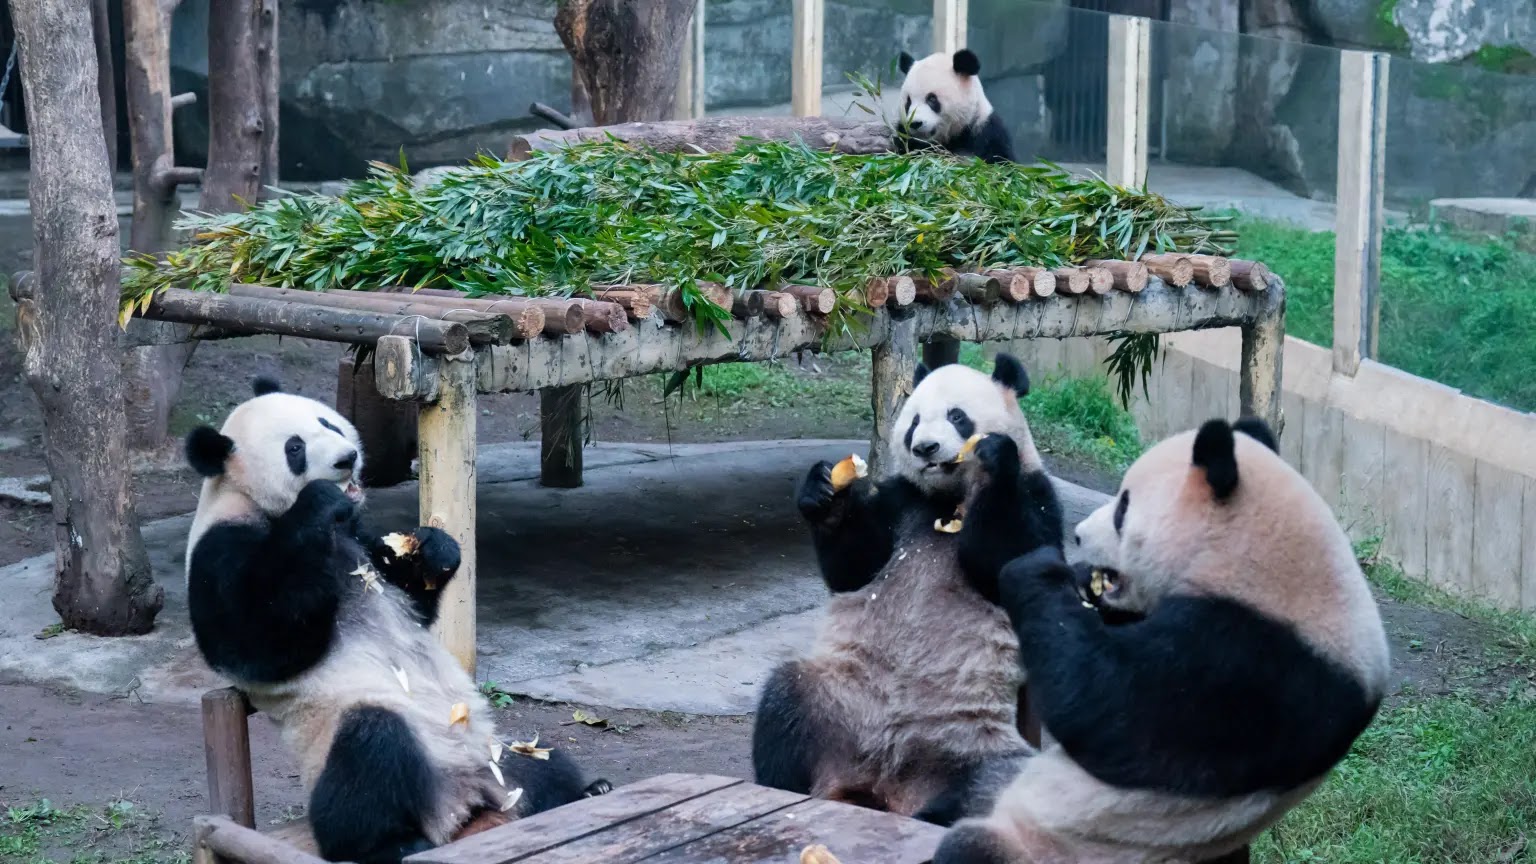 4 Pandas sit and eat like humans